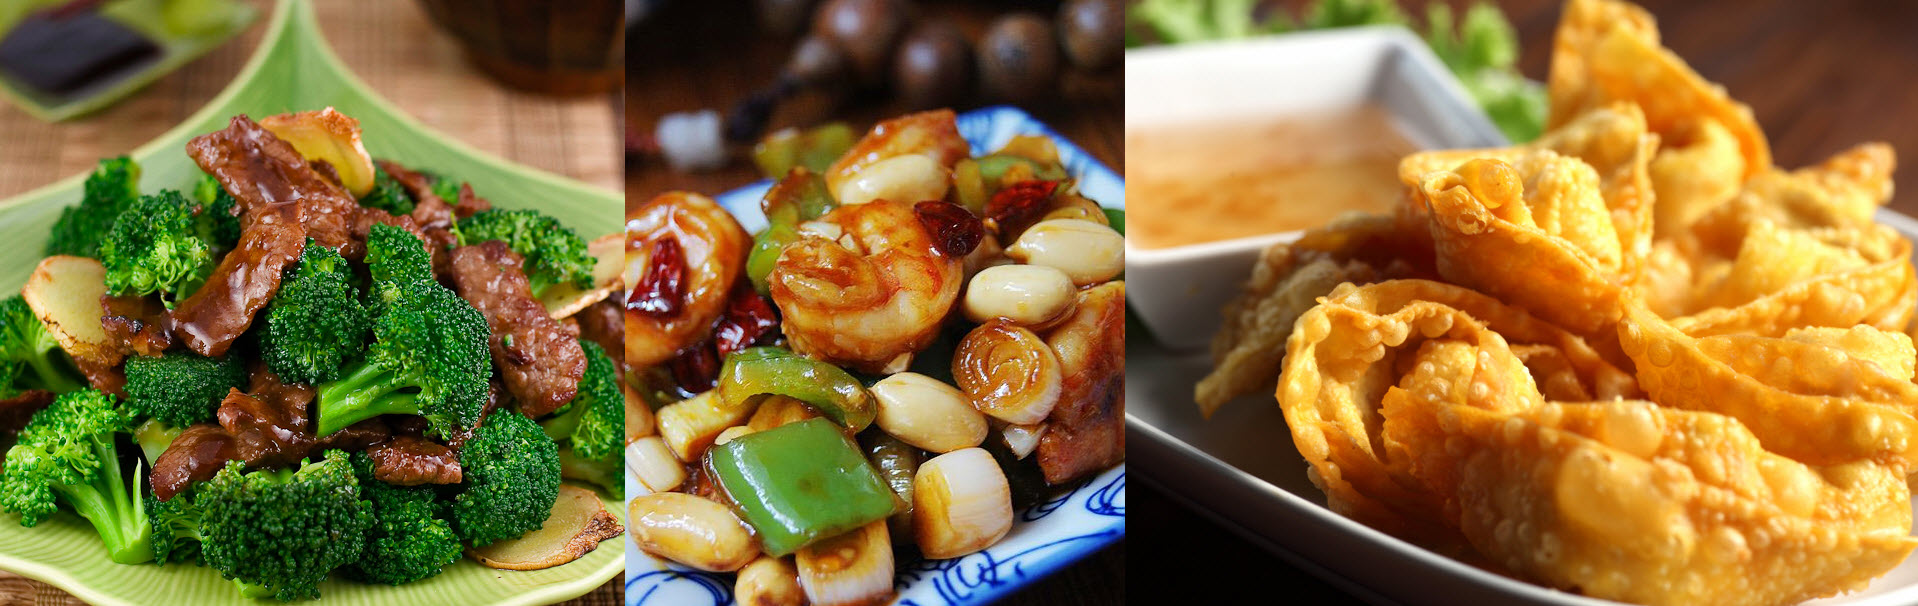 Your favorite Chinese food at Hong Kong Seafood Restaurant